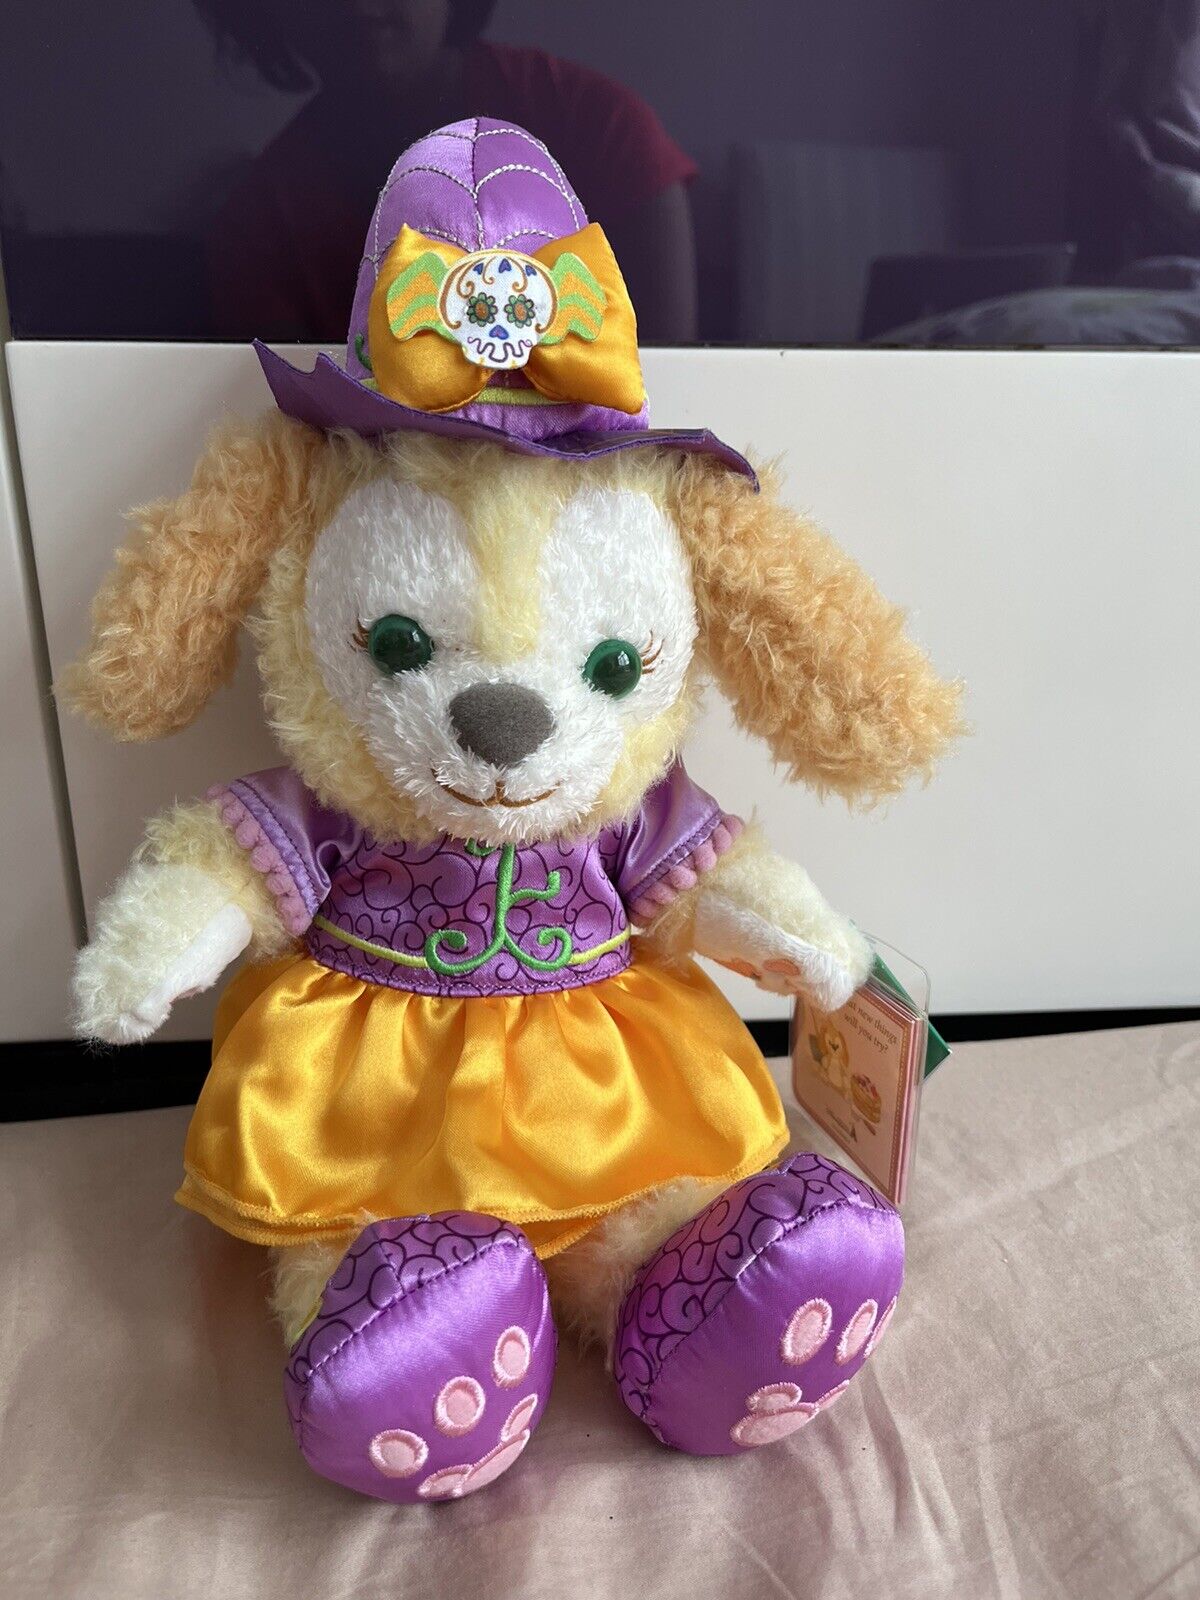 HKDL Hong Kong Disney Plush Halloween CookieAnn Plush Toy Doll 12” Size sS Duffy